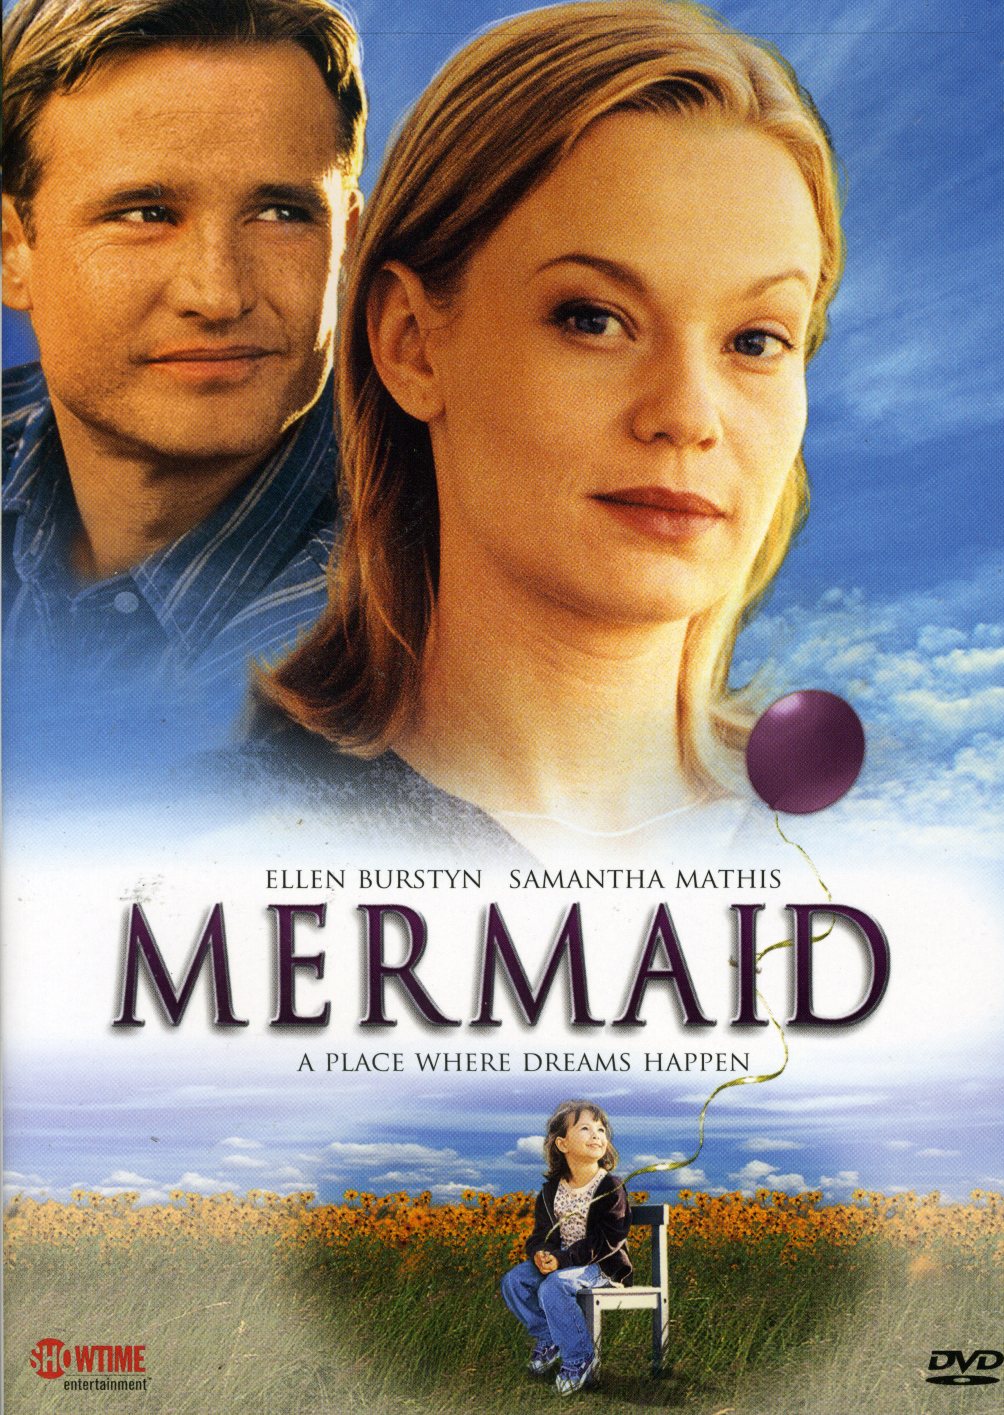 MERMAID (2000)